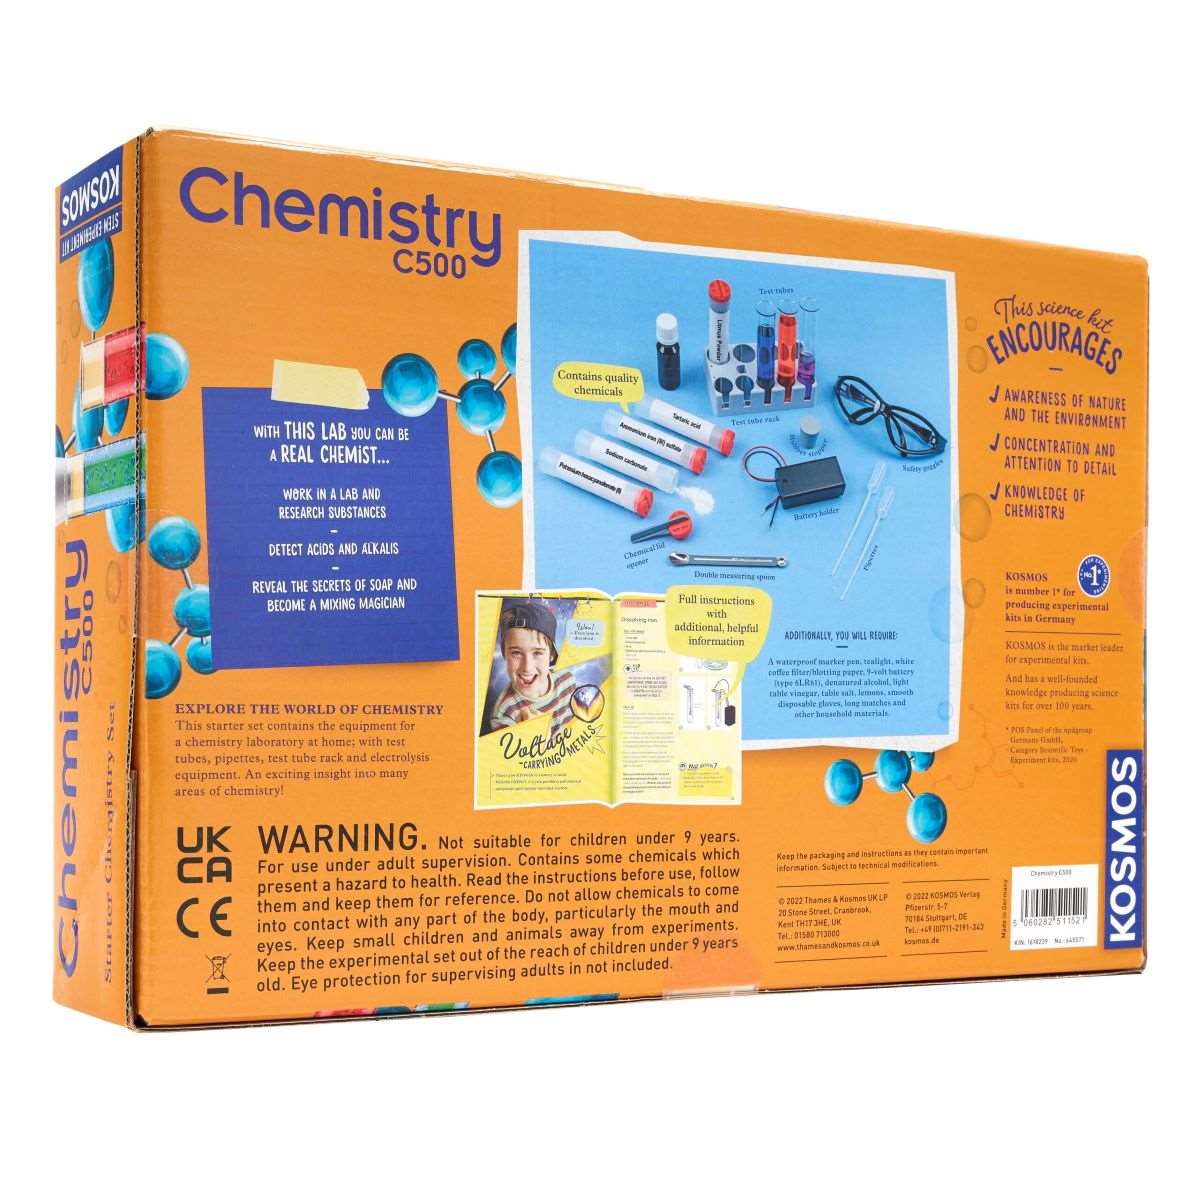 Thames and Kosmos C500 Chemistry Set box reverse